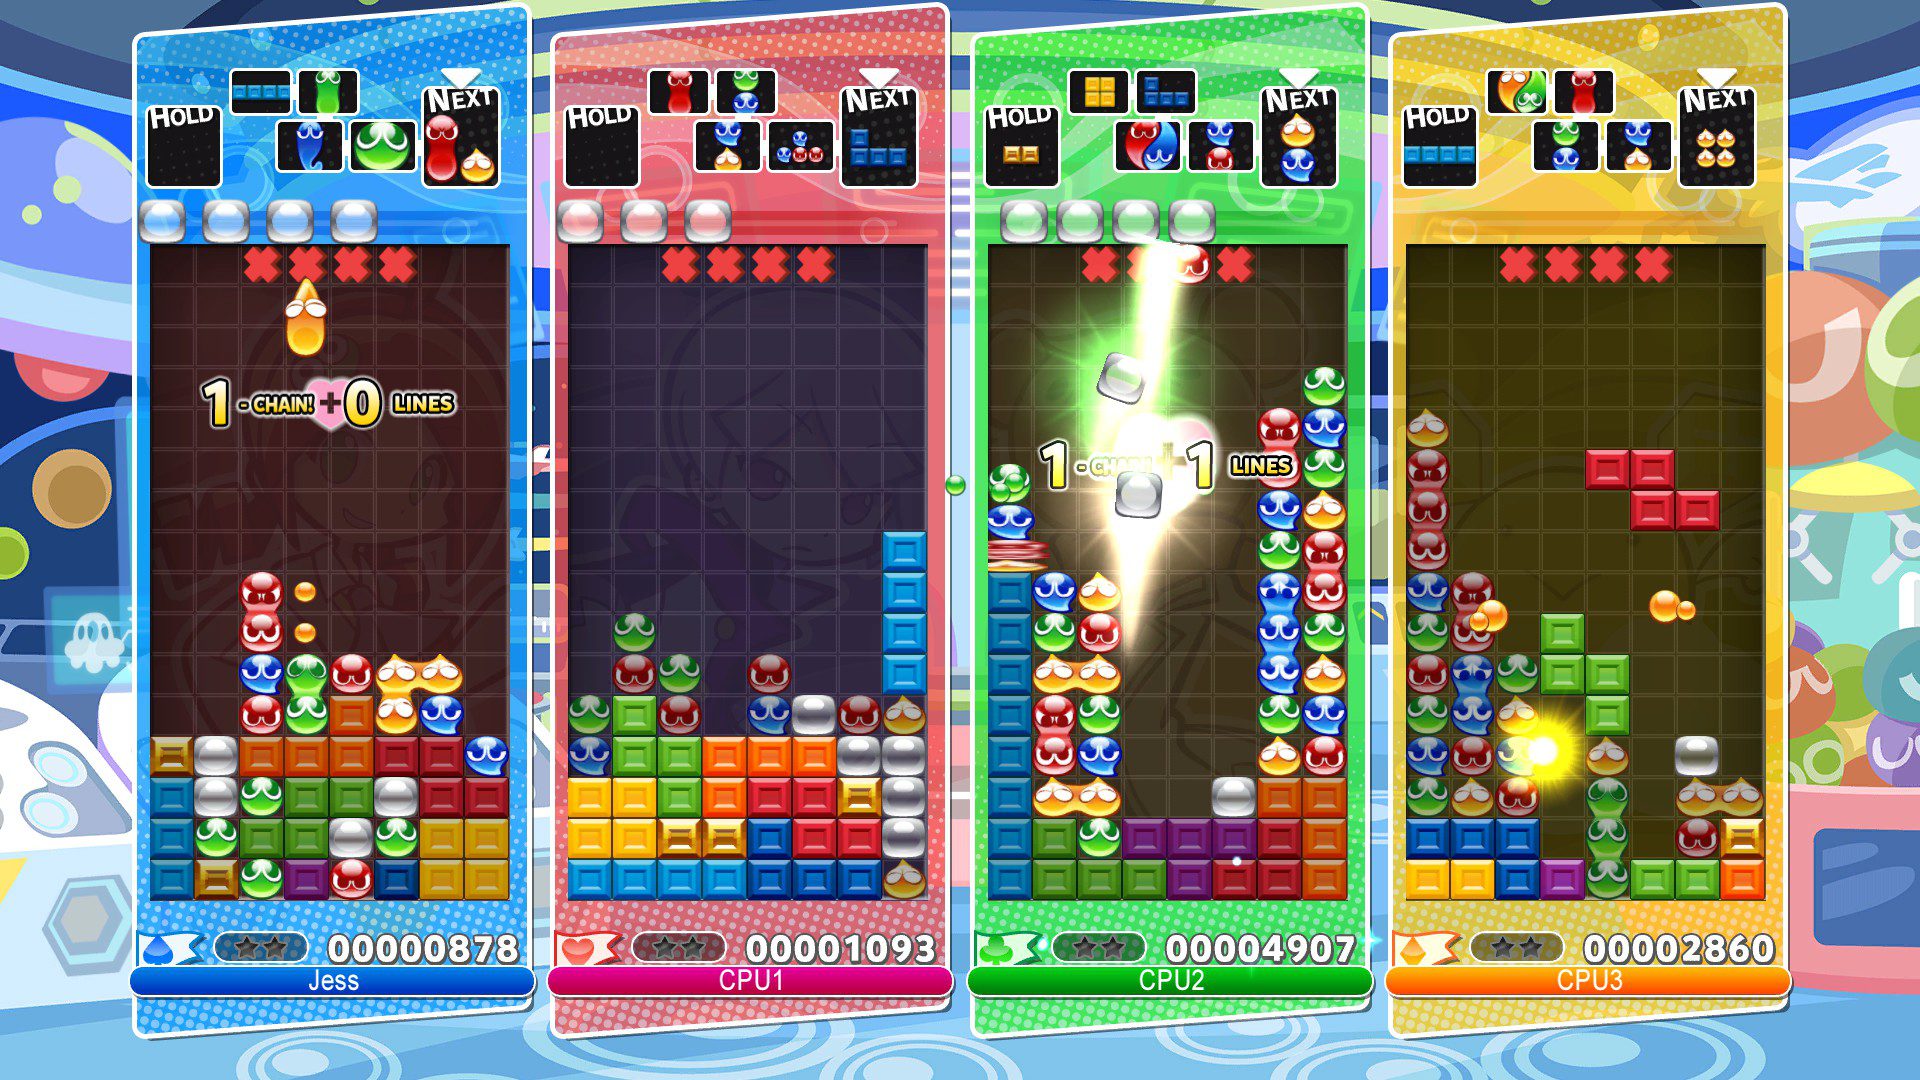 Puyo Puyo Tetris Stacks, Merges & Clears It’s Way To PC